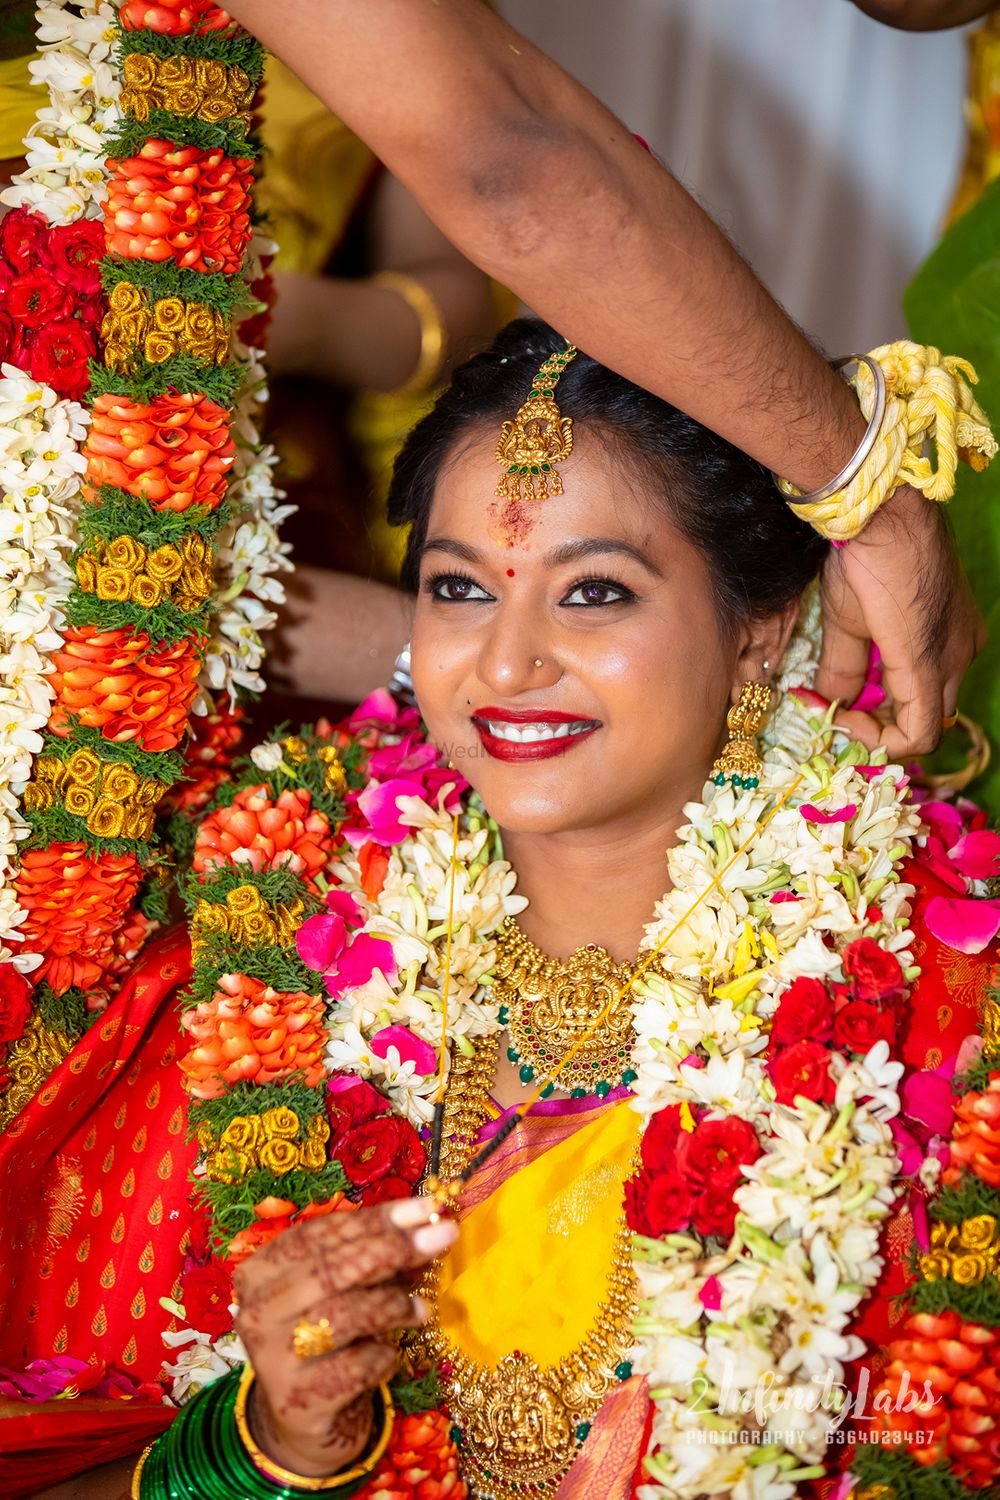 Photo From Kannada Wedding -Srinidhi & Mukund - By 2InfinityLabs